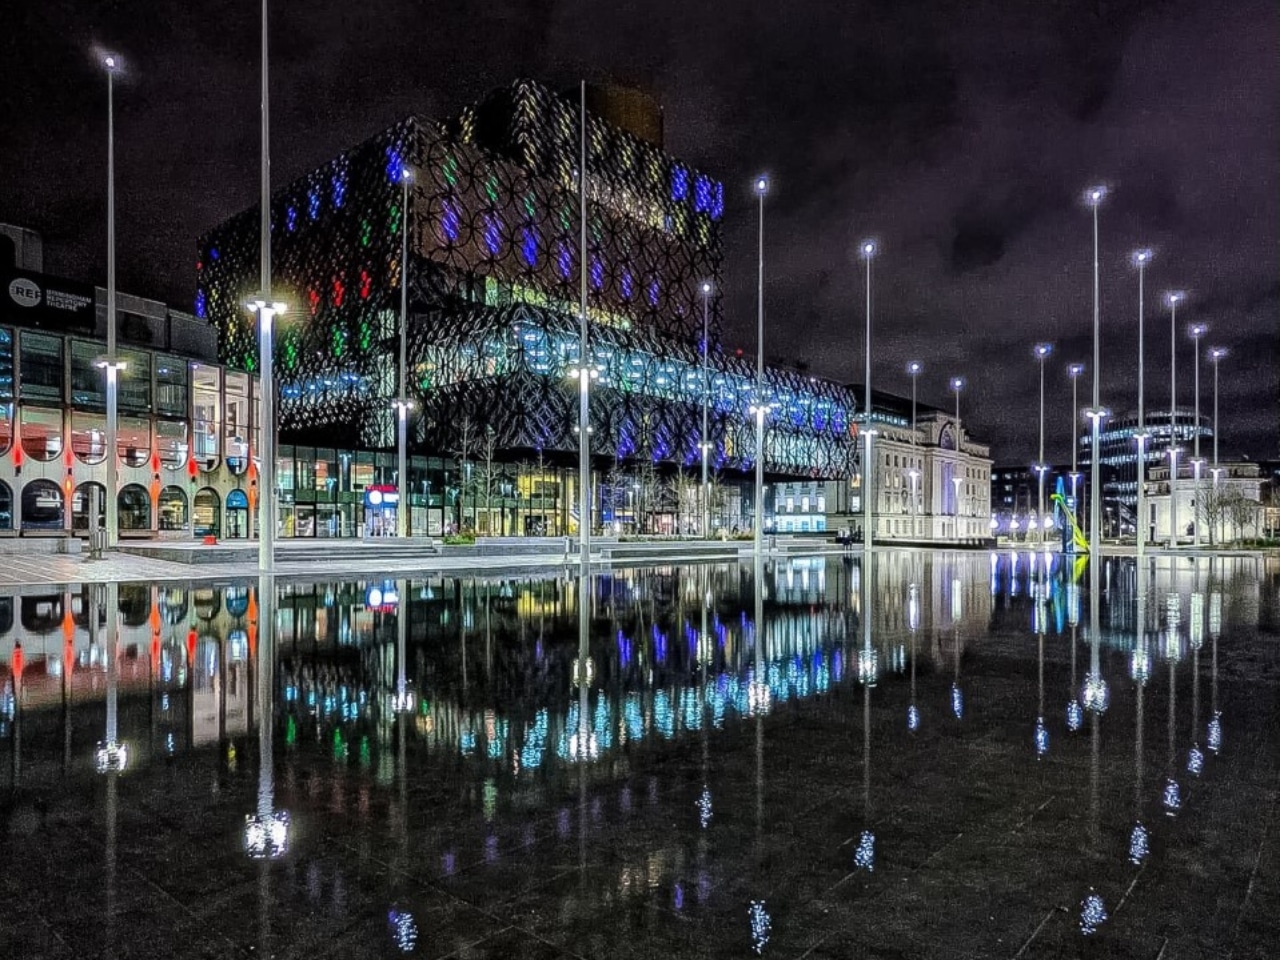 Birmingham Library at Night